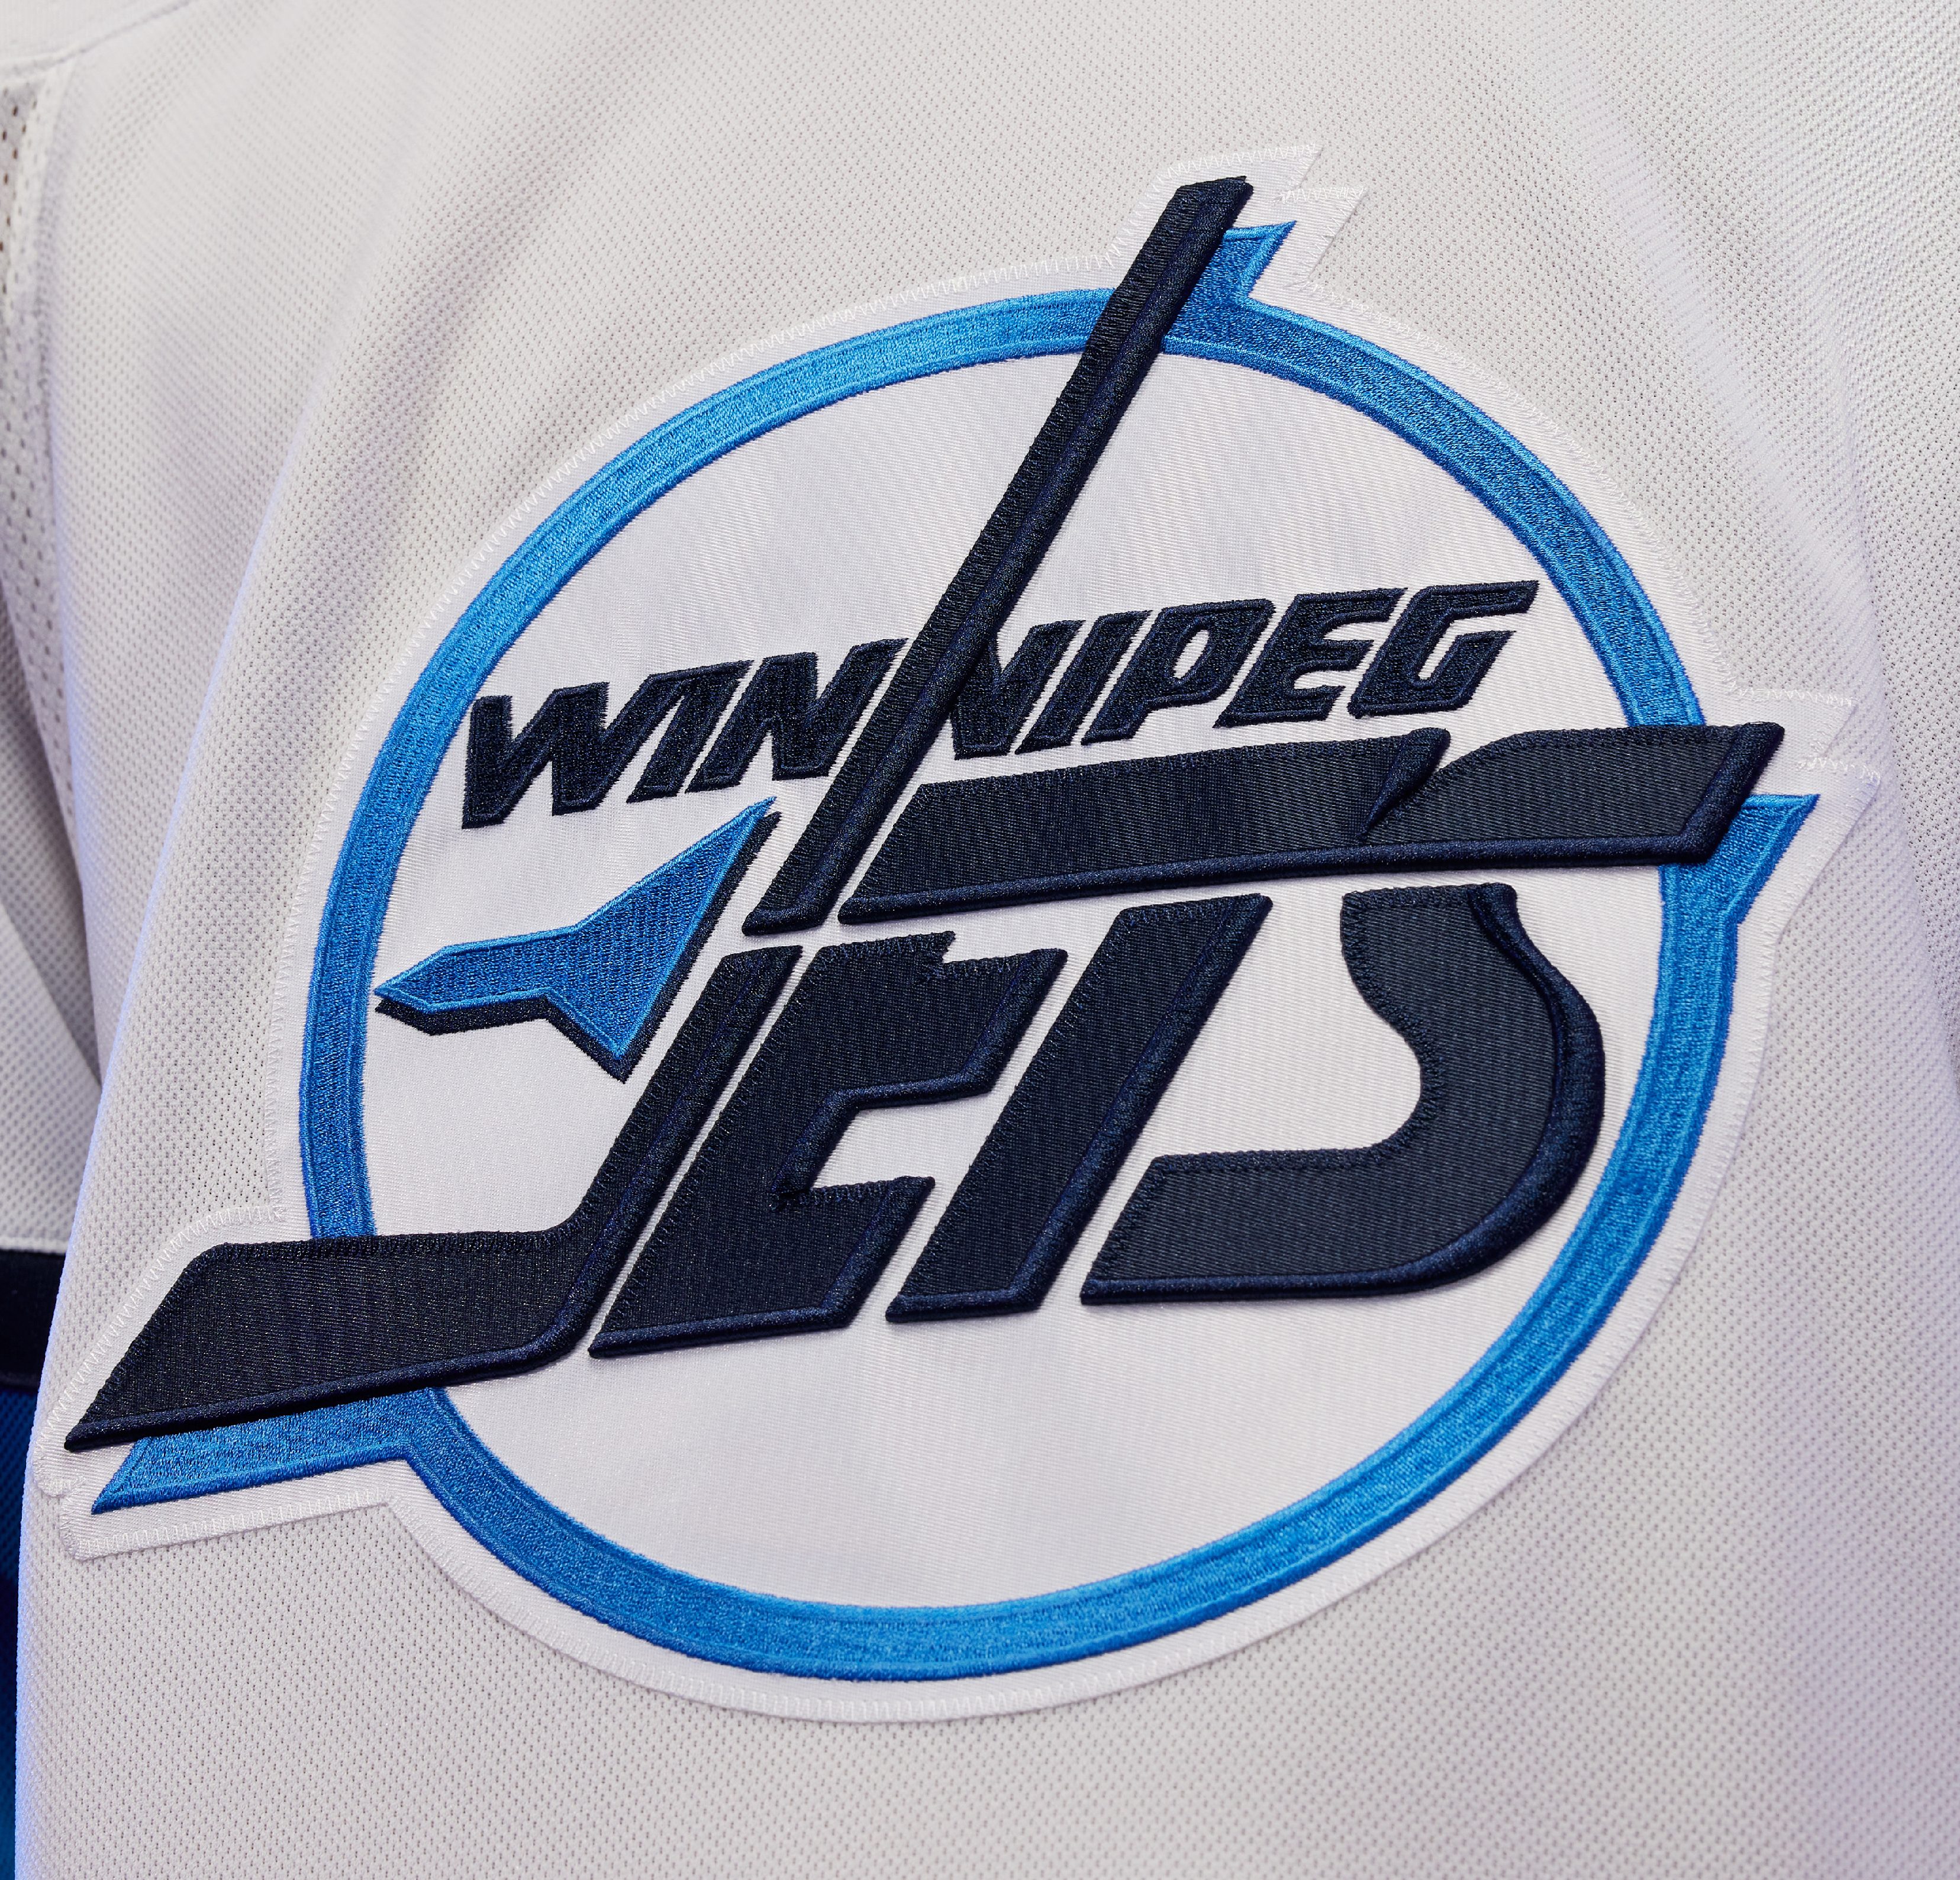 NHL: Winnipeg Jets unveil Reverse Retro jersey